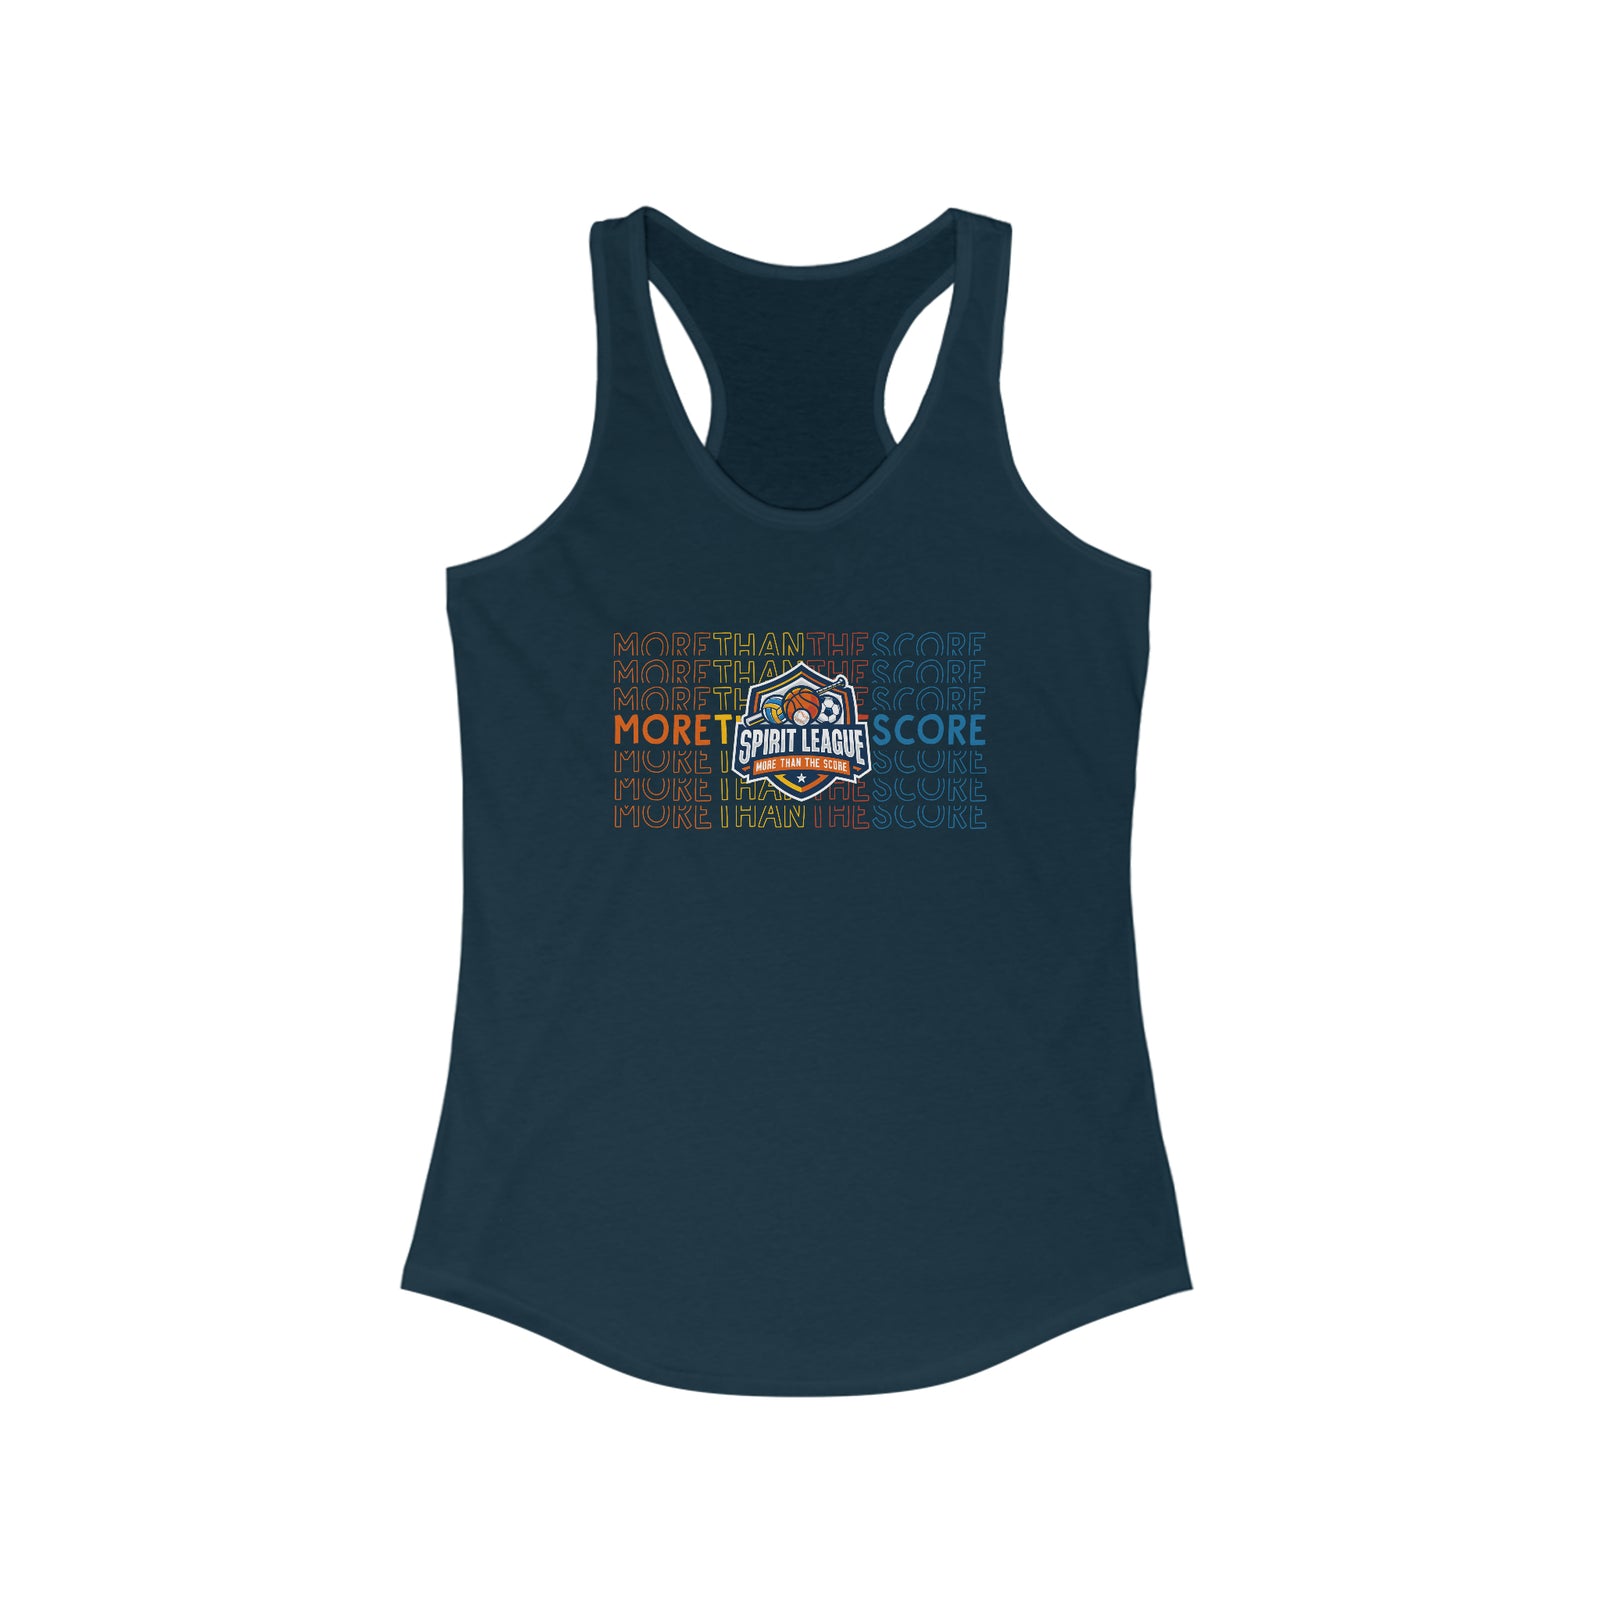 Spirit League Logo Shirt | More Than The Score | Women's Ideal Racerback Tank Top